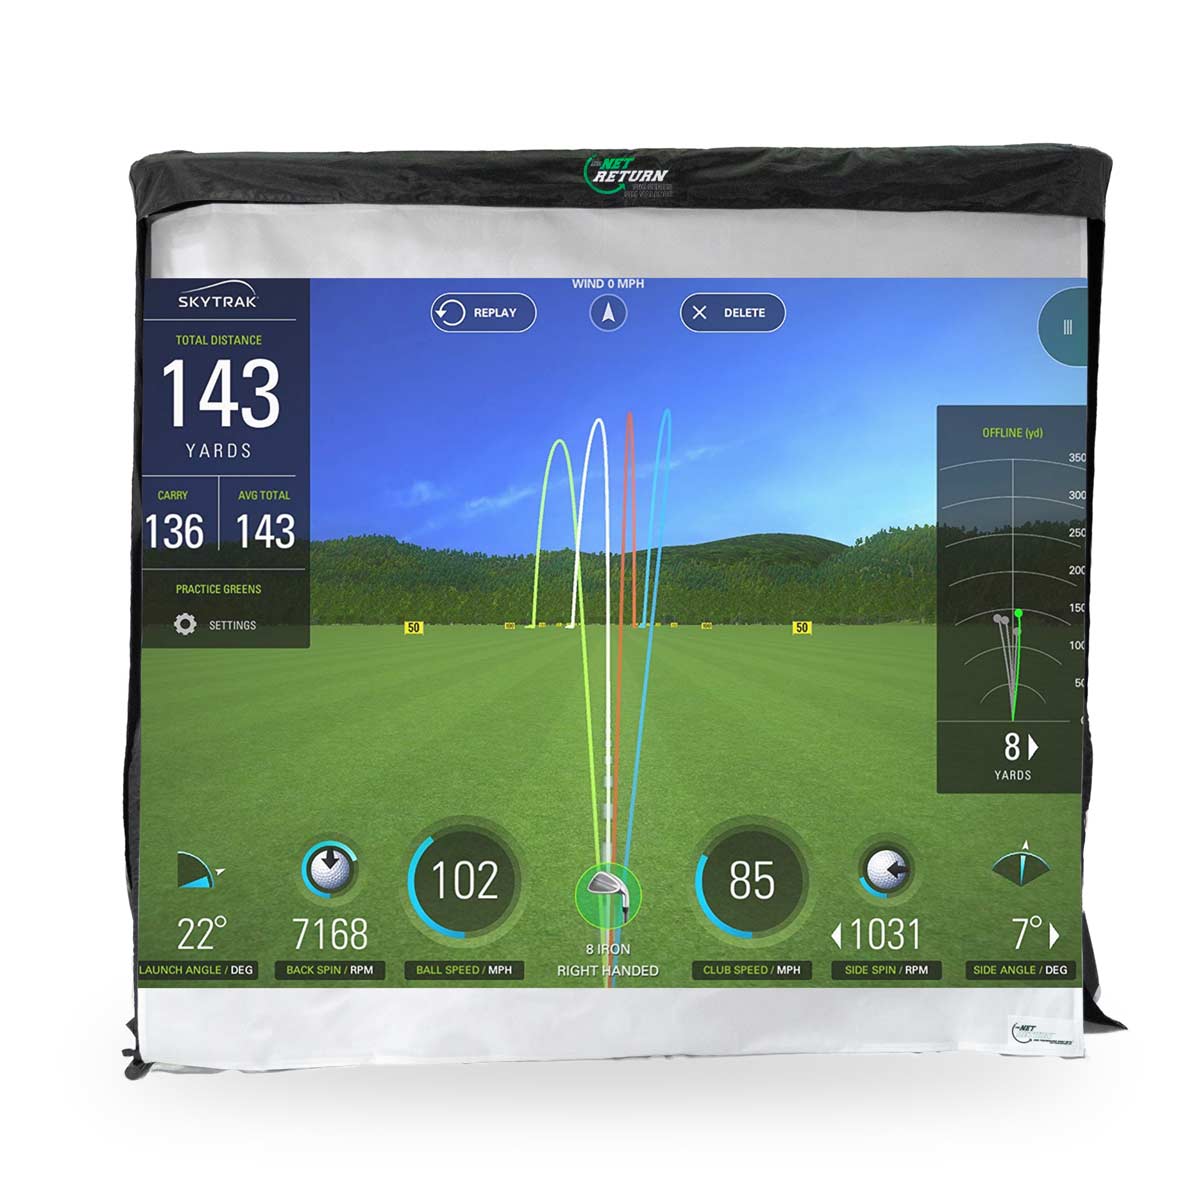 Golfnet Net Return Simulator Kit - Ultimativer Golfsimulator